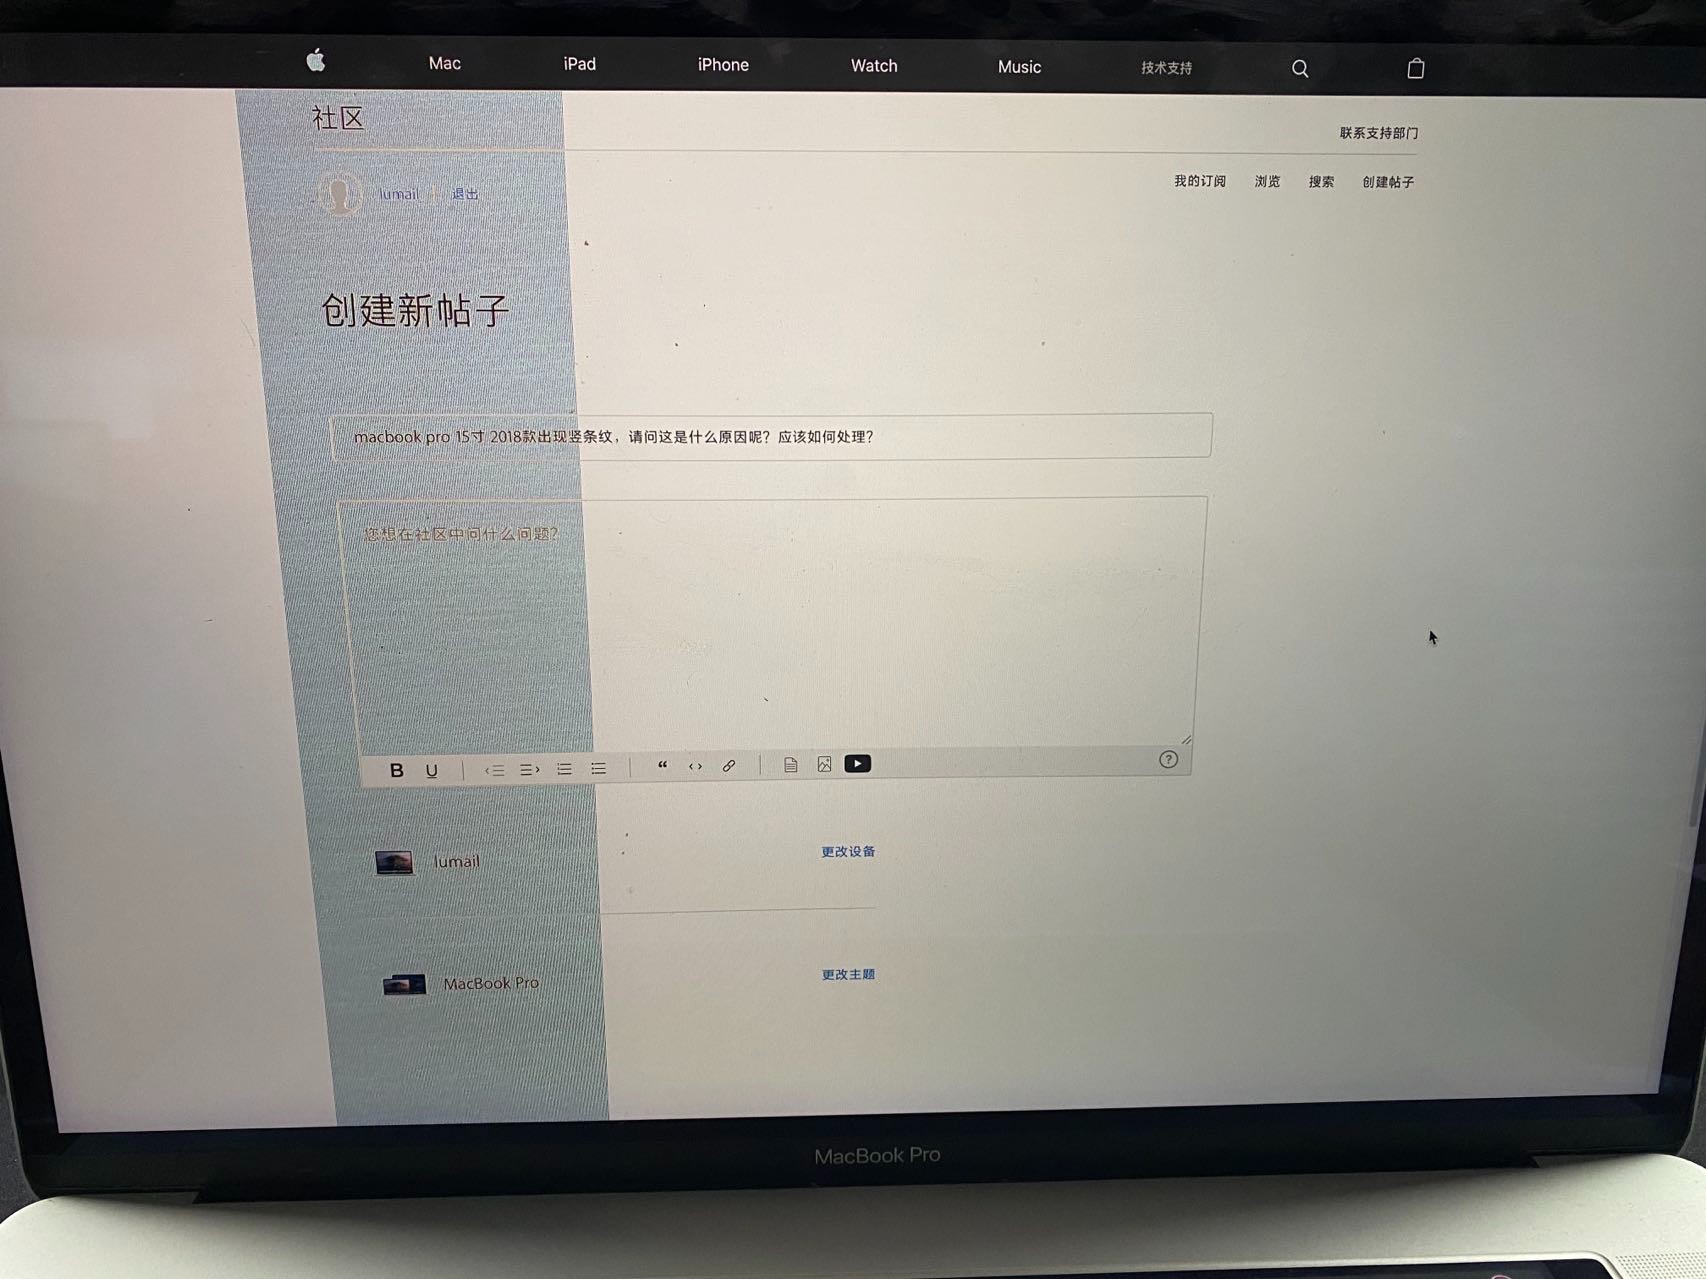 macbook pro 15寸2018款出现… - Apple 社区